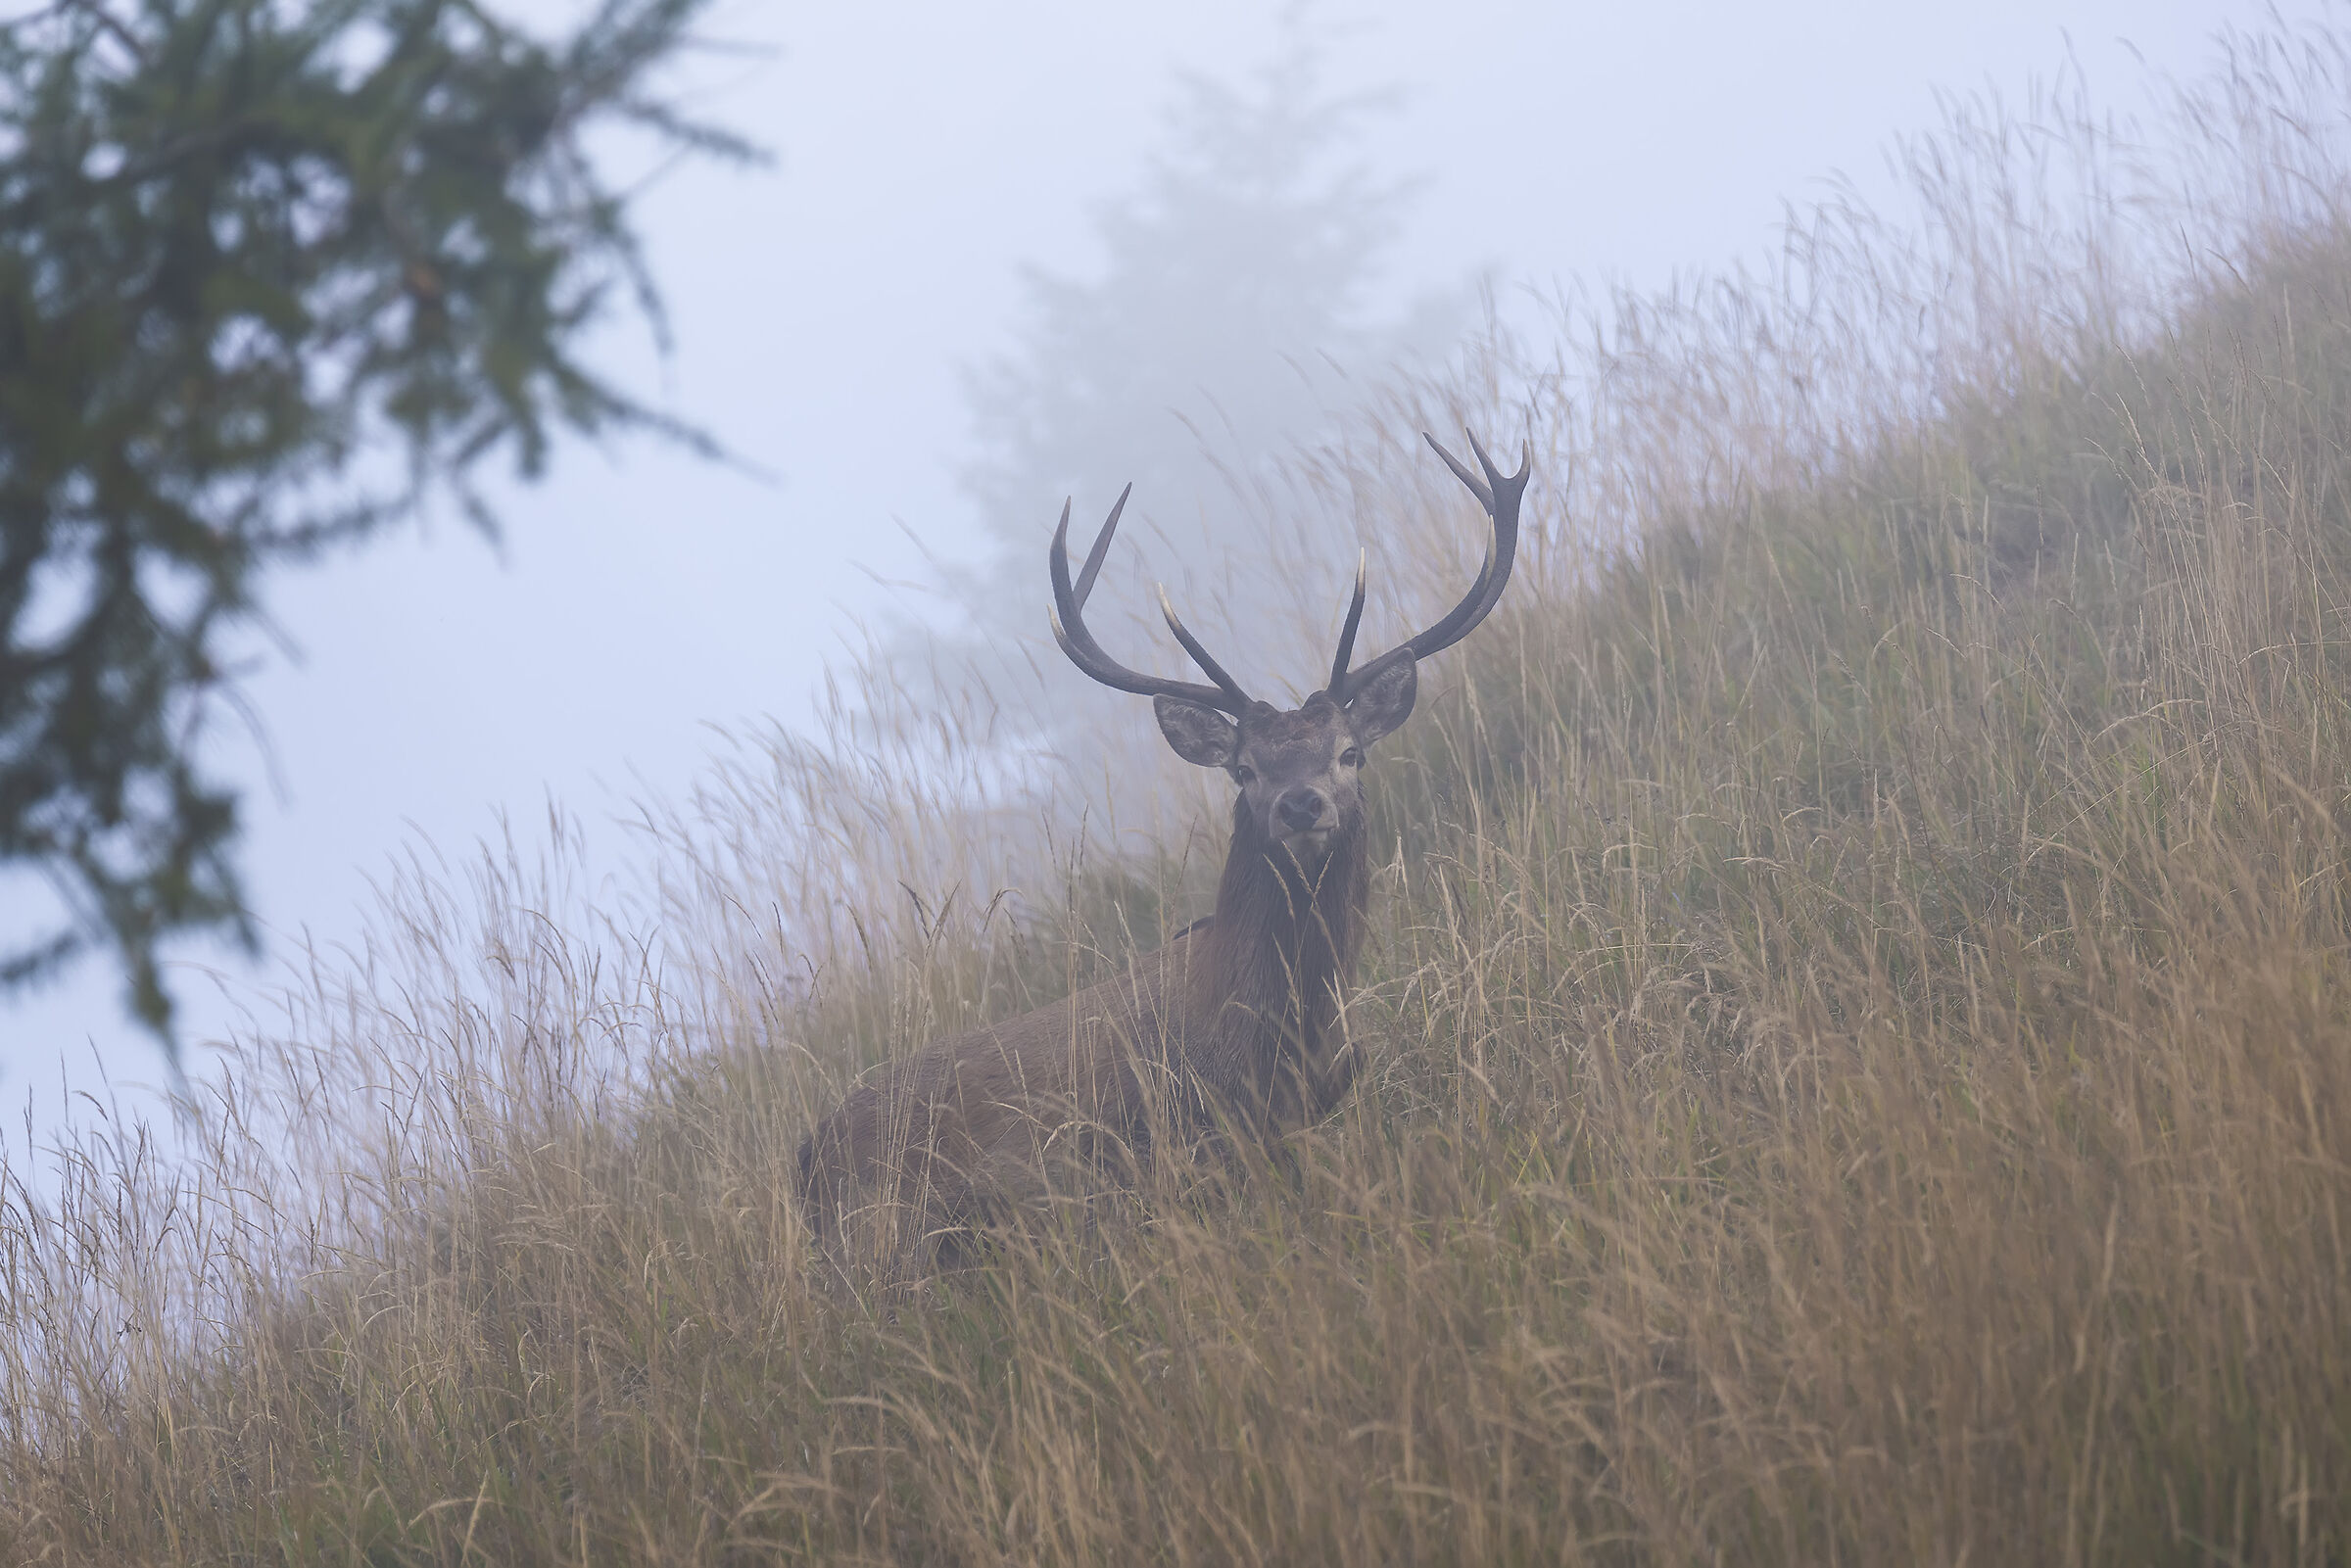 Deer on a foggy day...